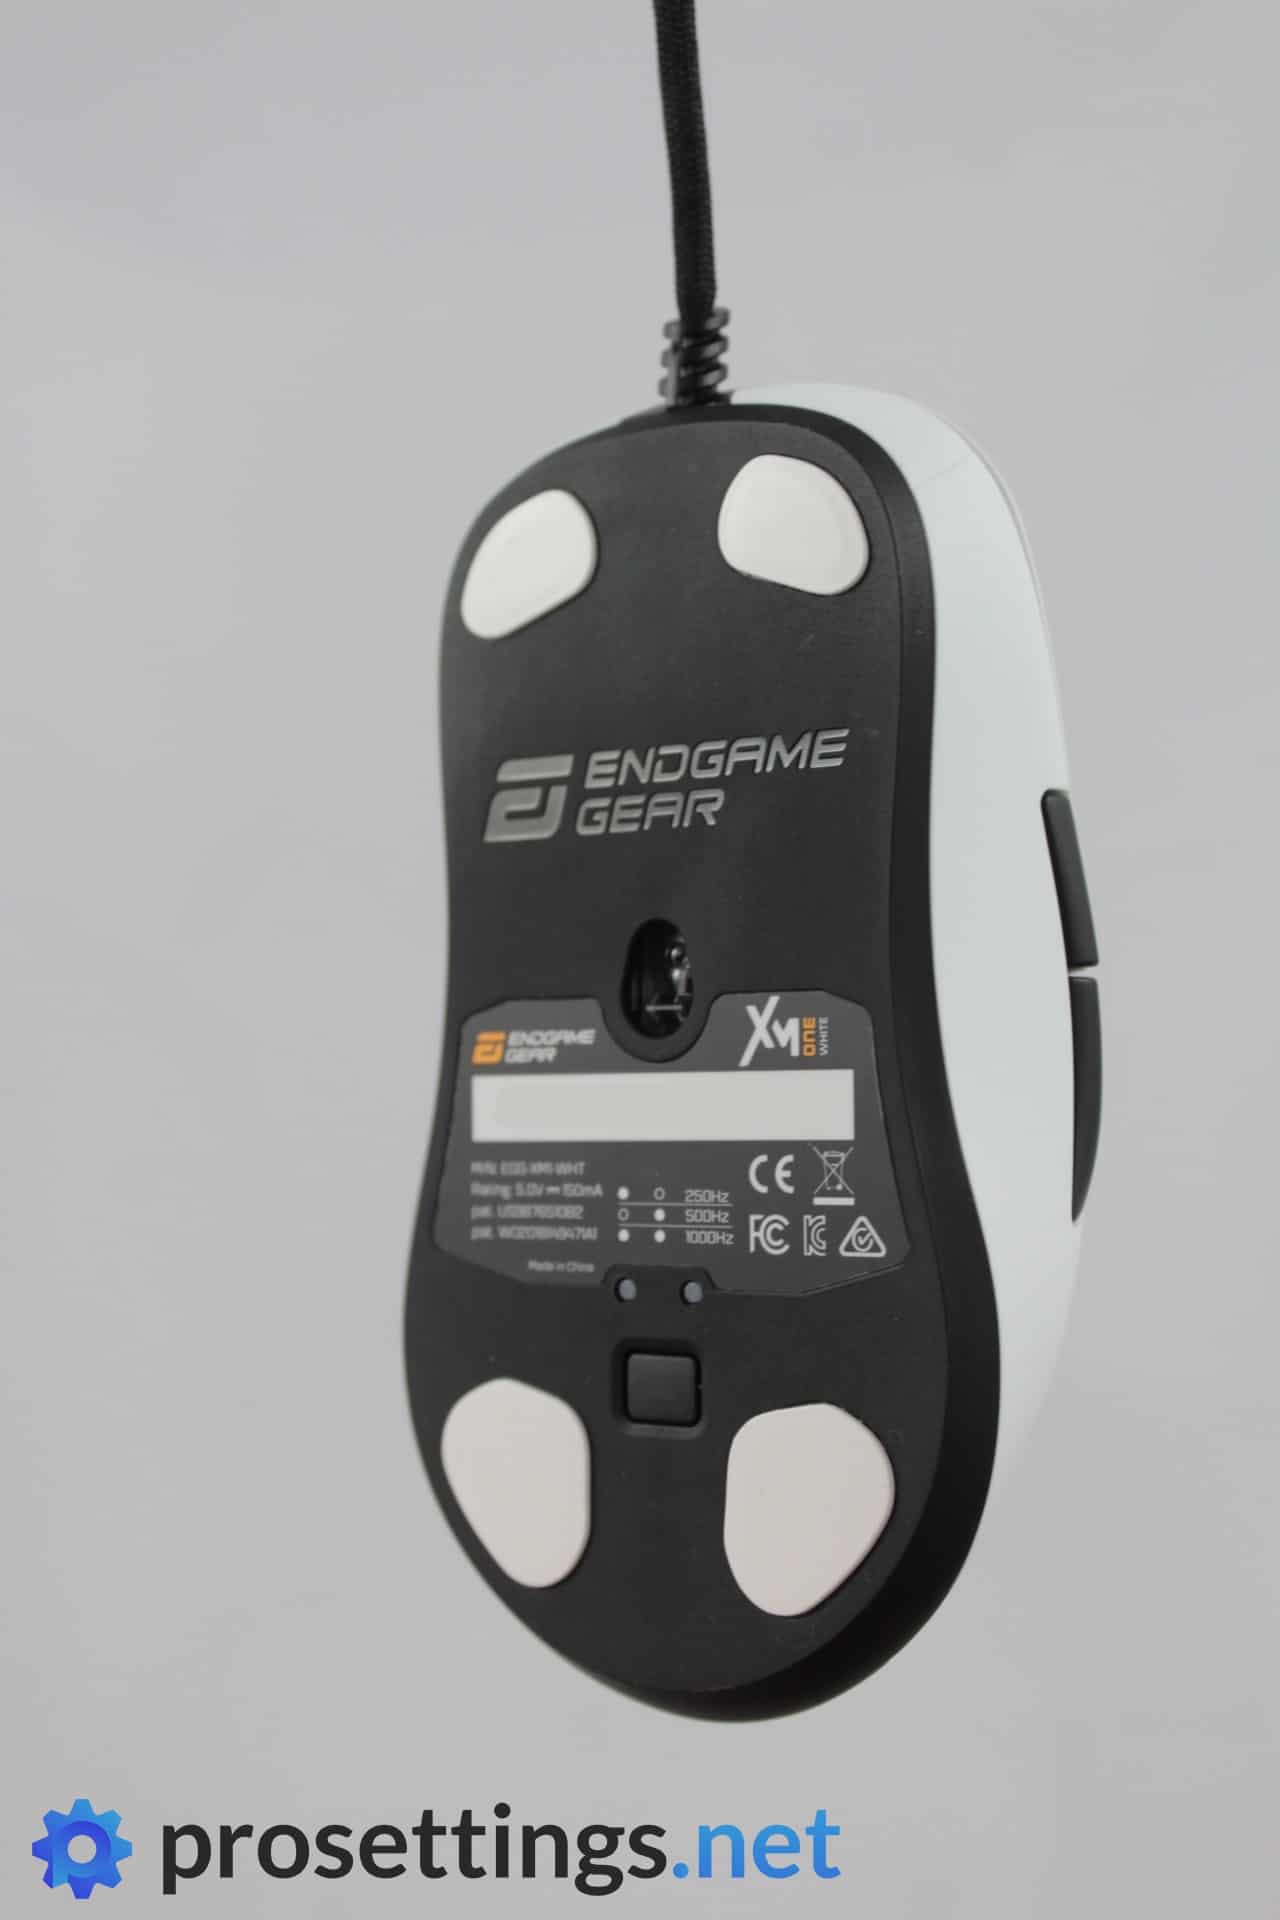 Endgame Gear XM1 Mouse Review Sensor